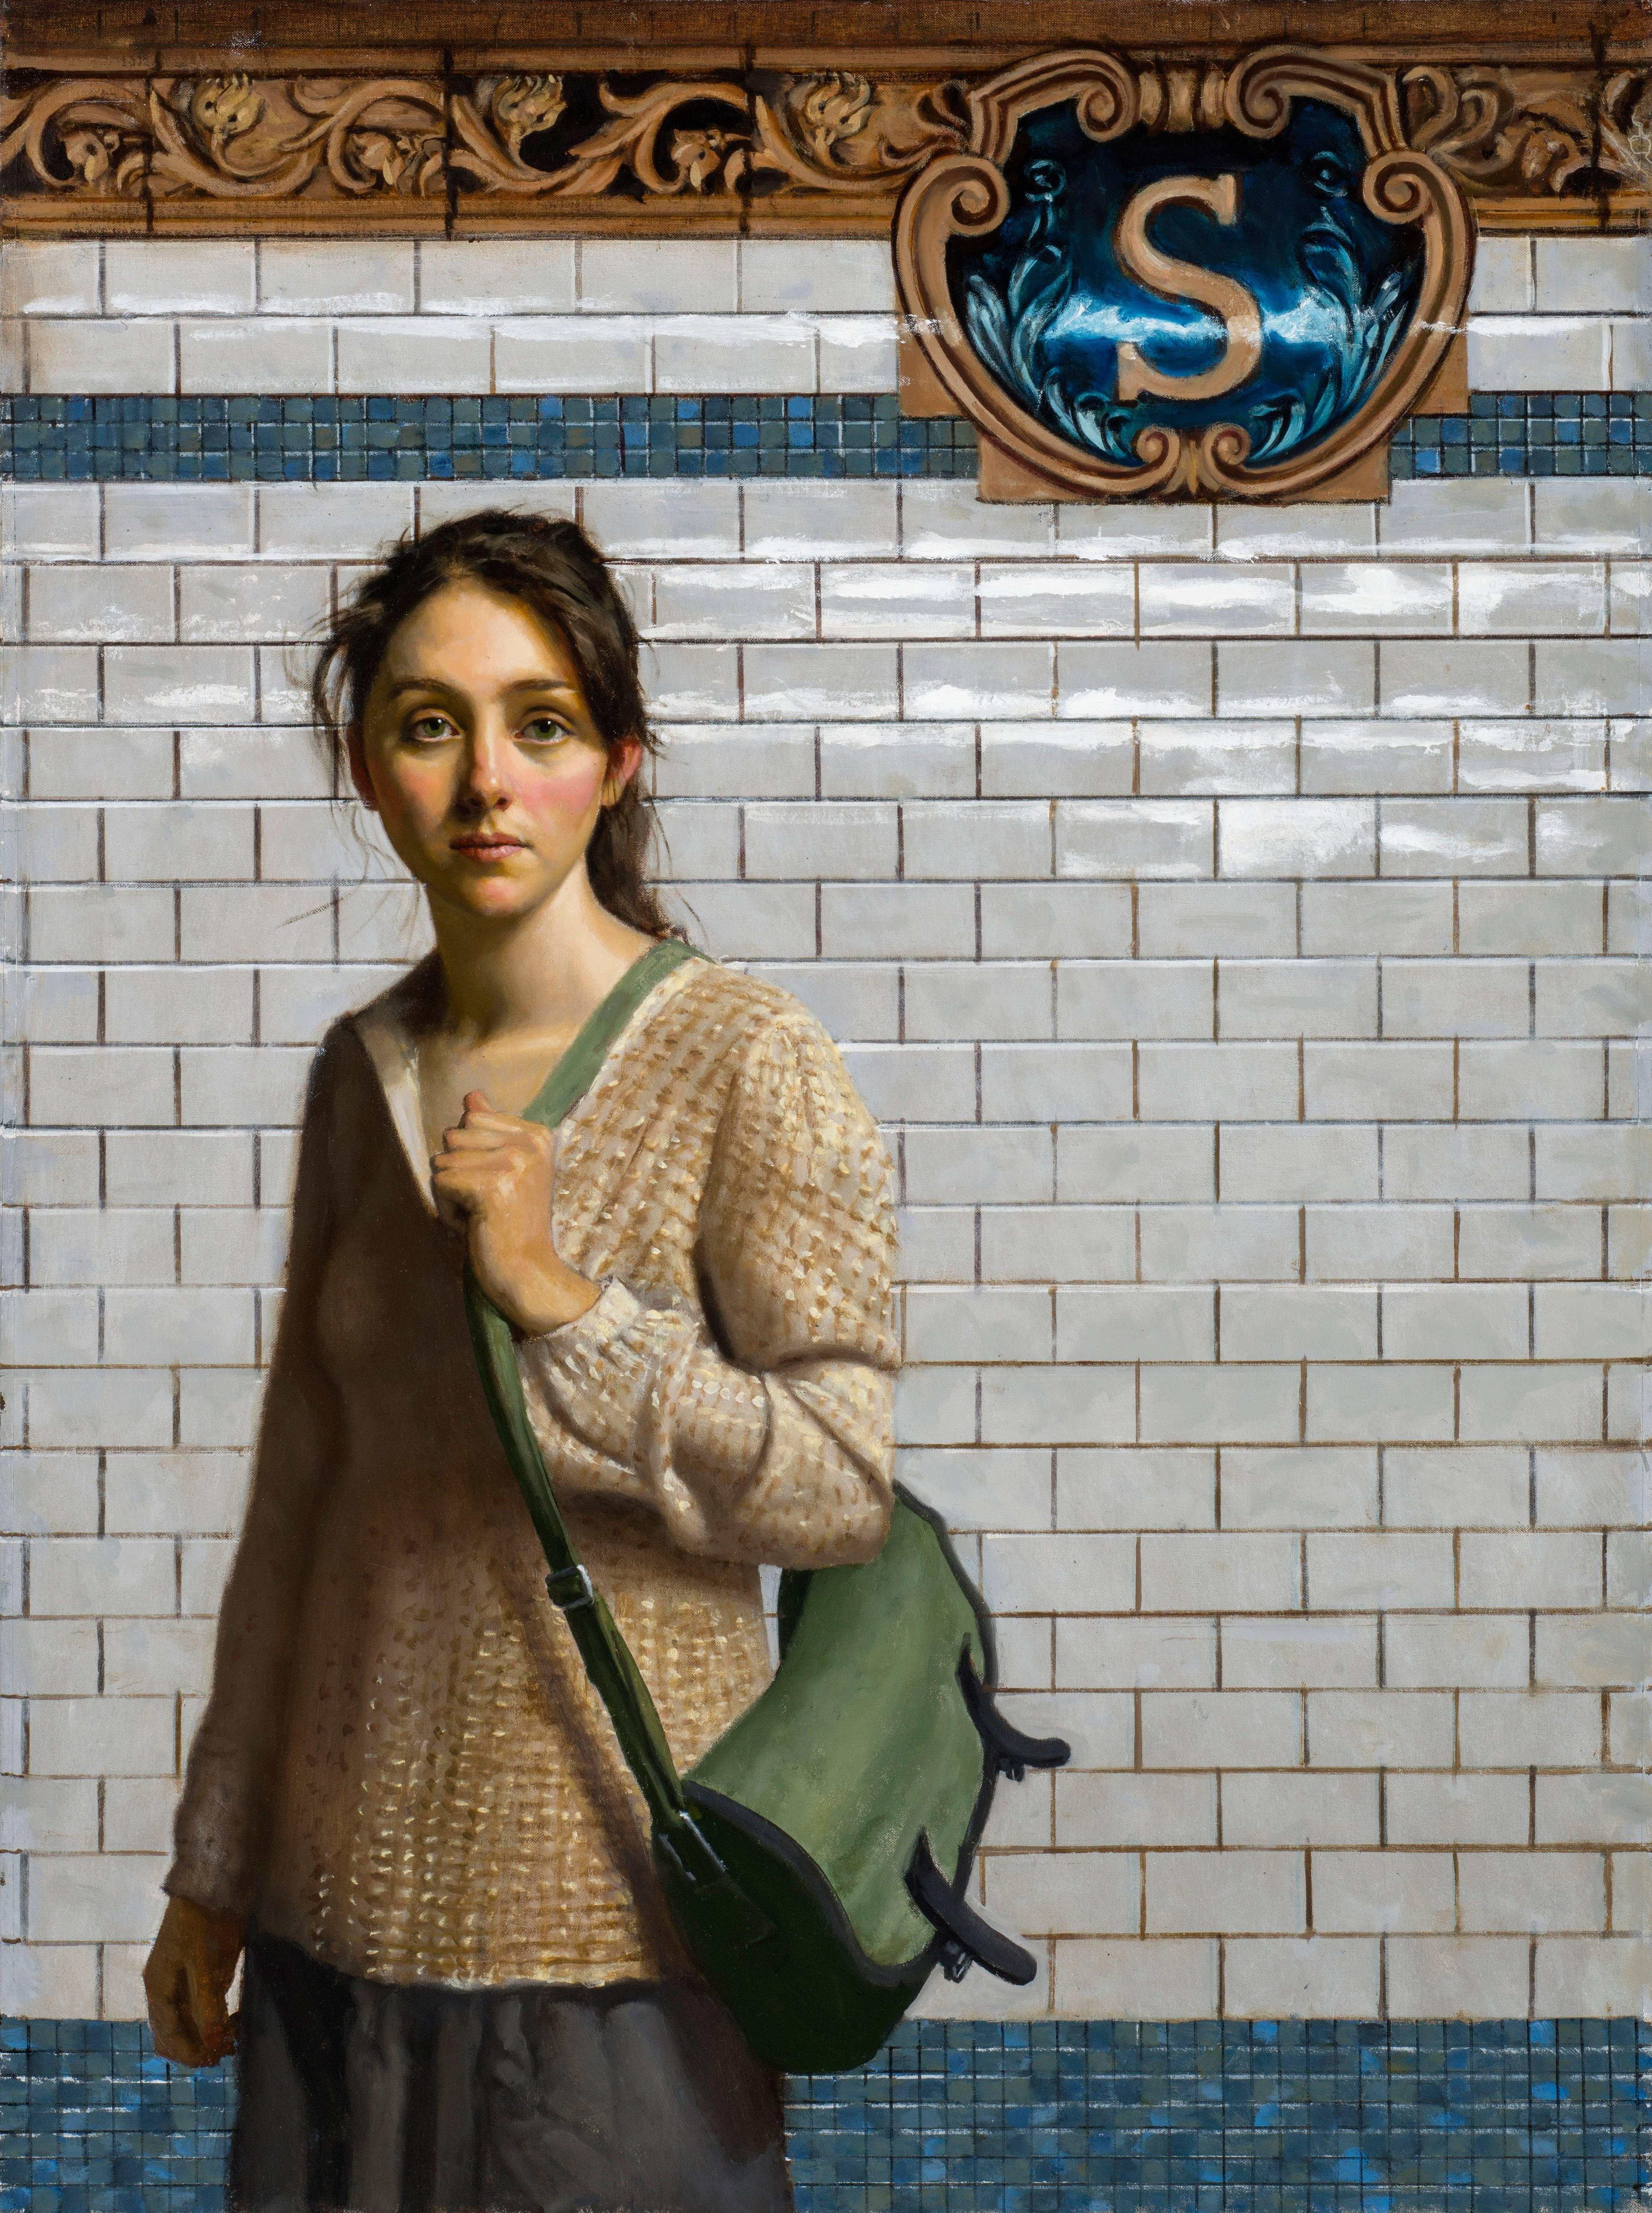 Daniel Greene Interior Painting - SOPHIE- SPRING ST., portrait of girl, subway station, new york city, hyper-real